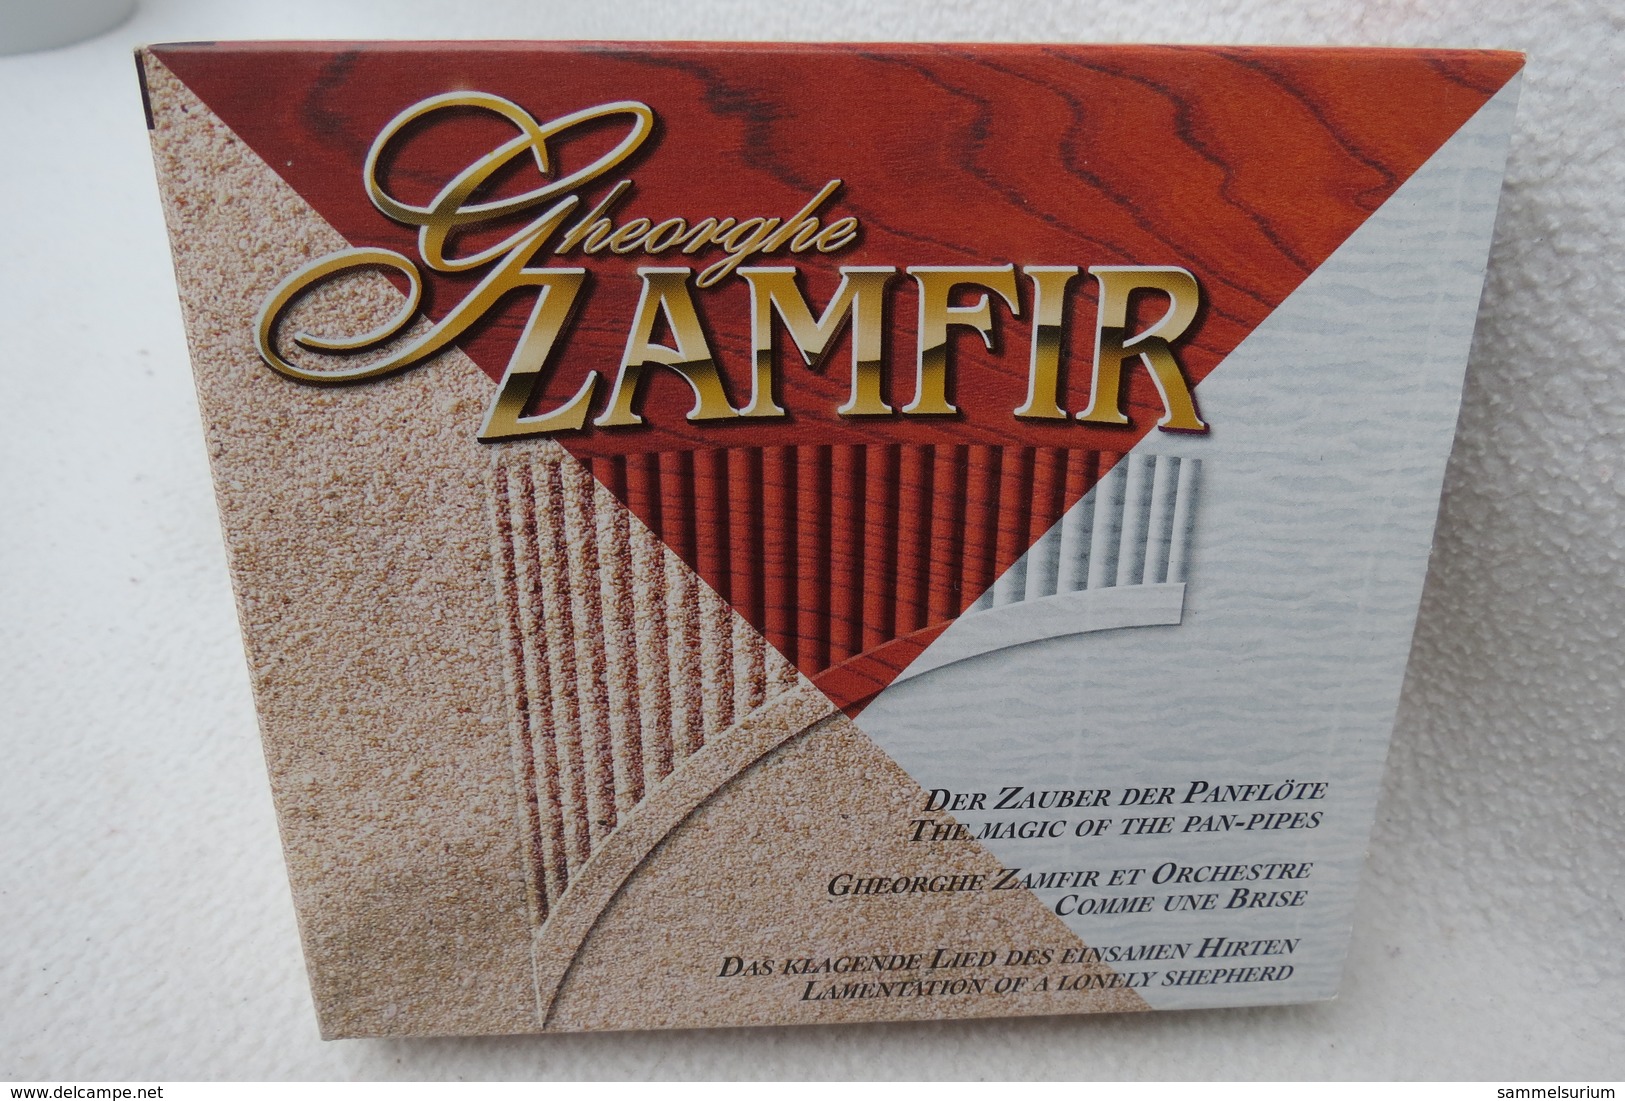 3 CD-Set "Gheorghe Zamfir" Der Zauber Der Panflöte - Compilaciones